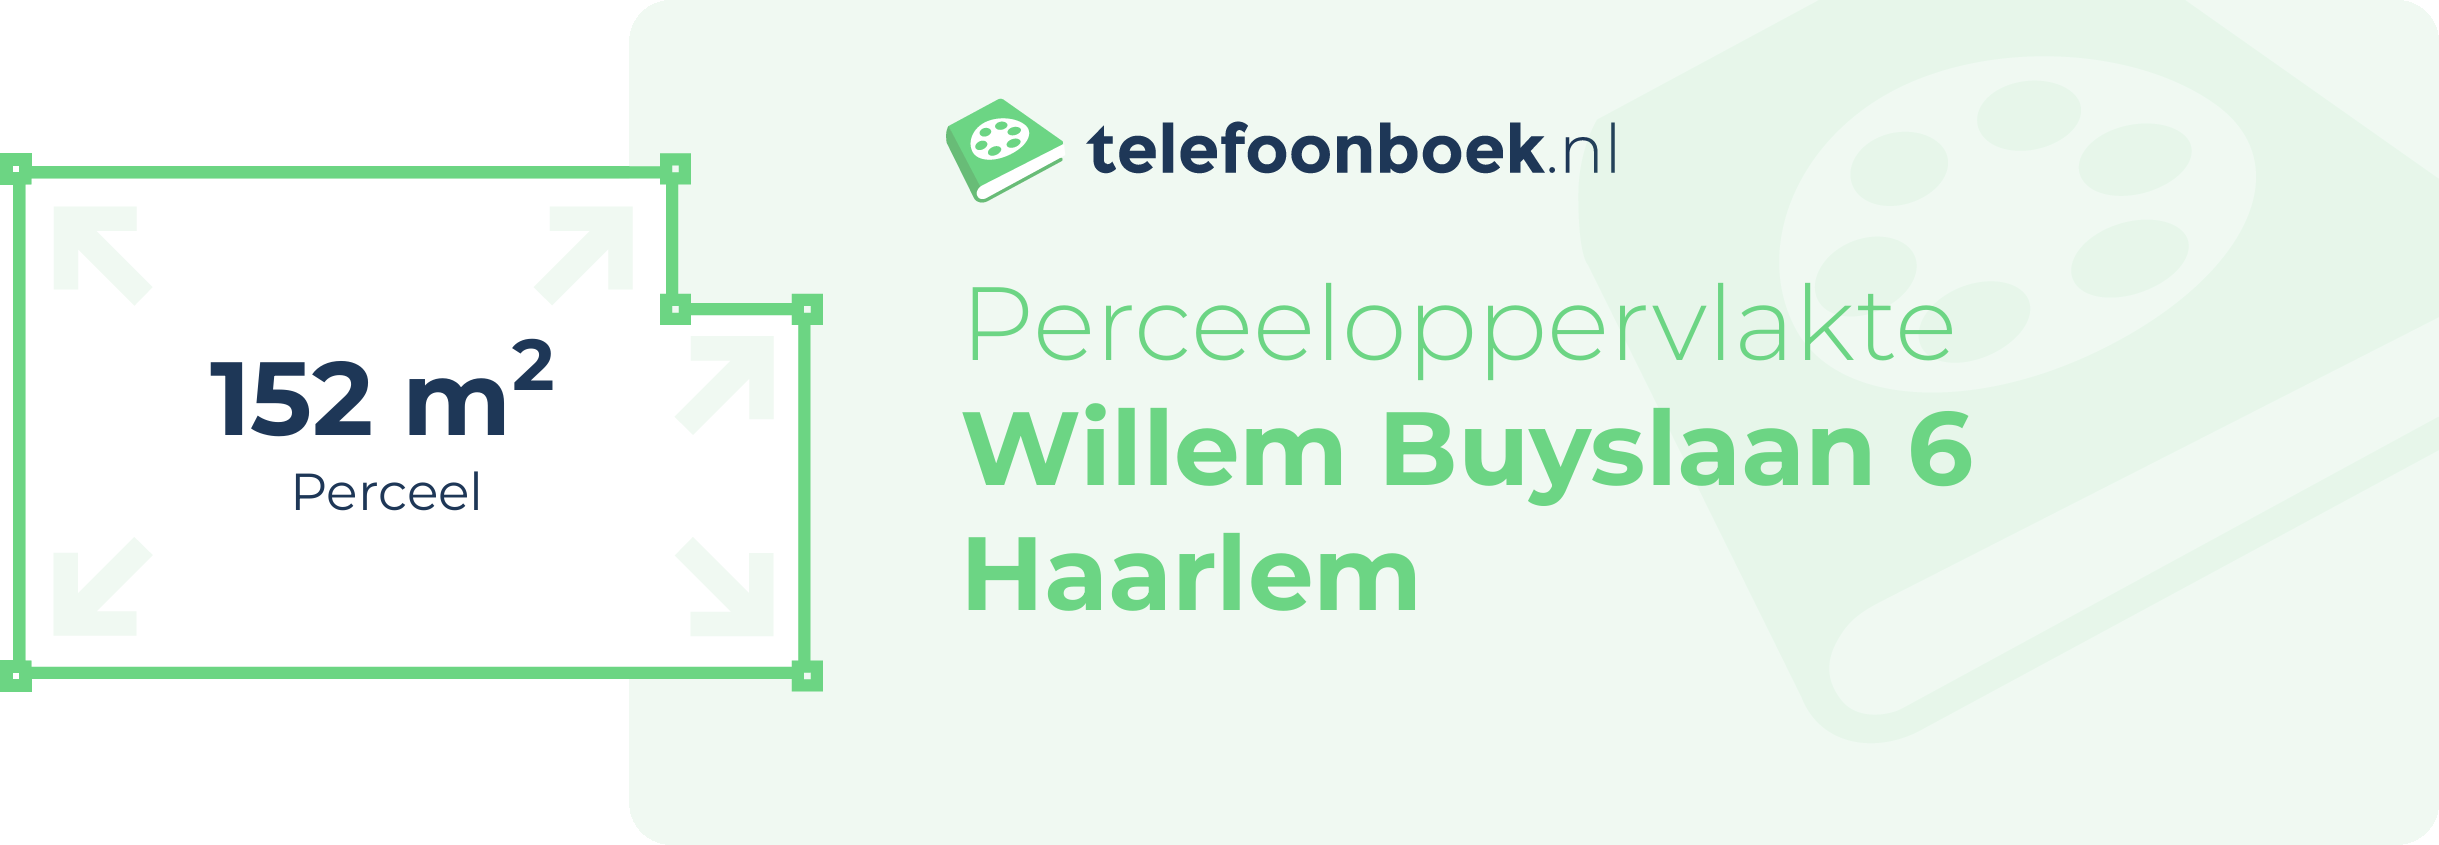 Perceeloppervlakte Willem Buyslaan 6 Haarlem